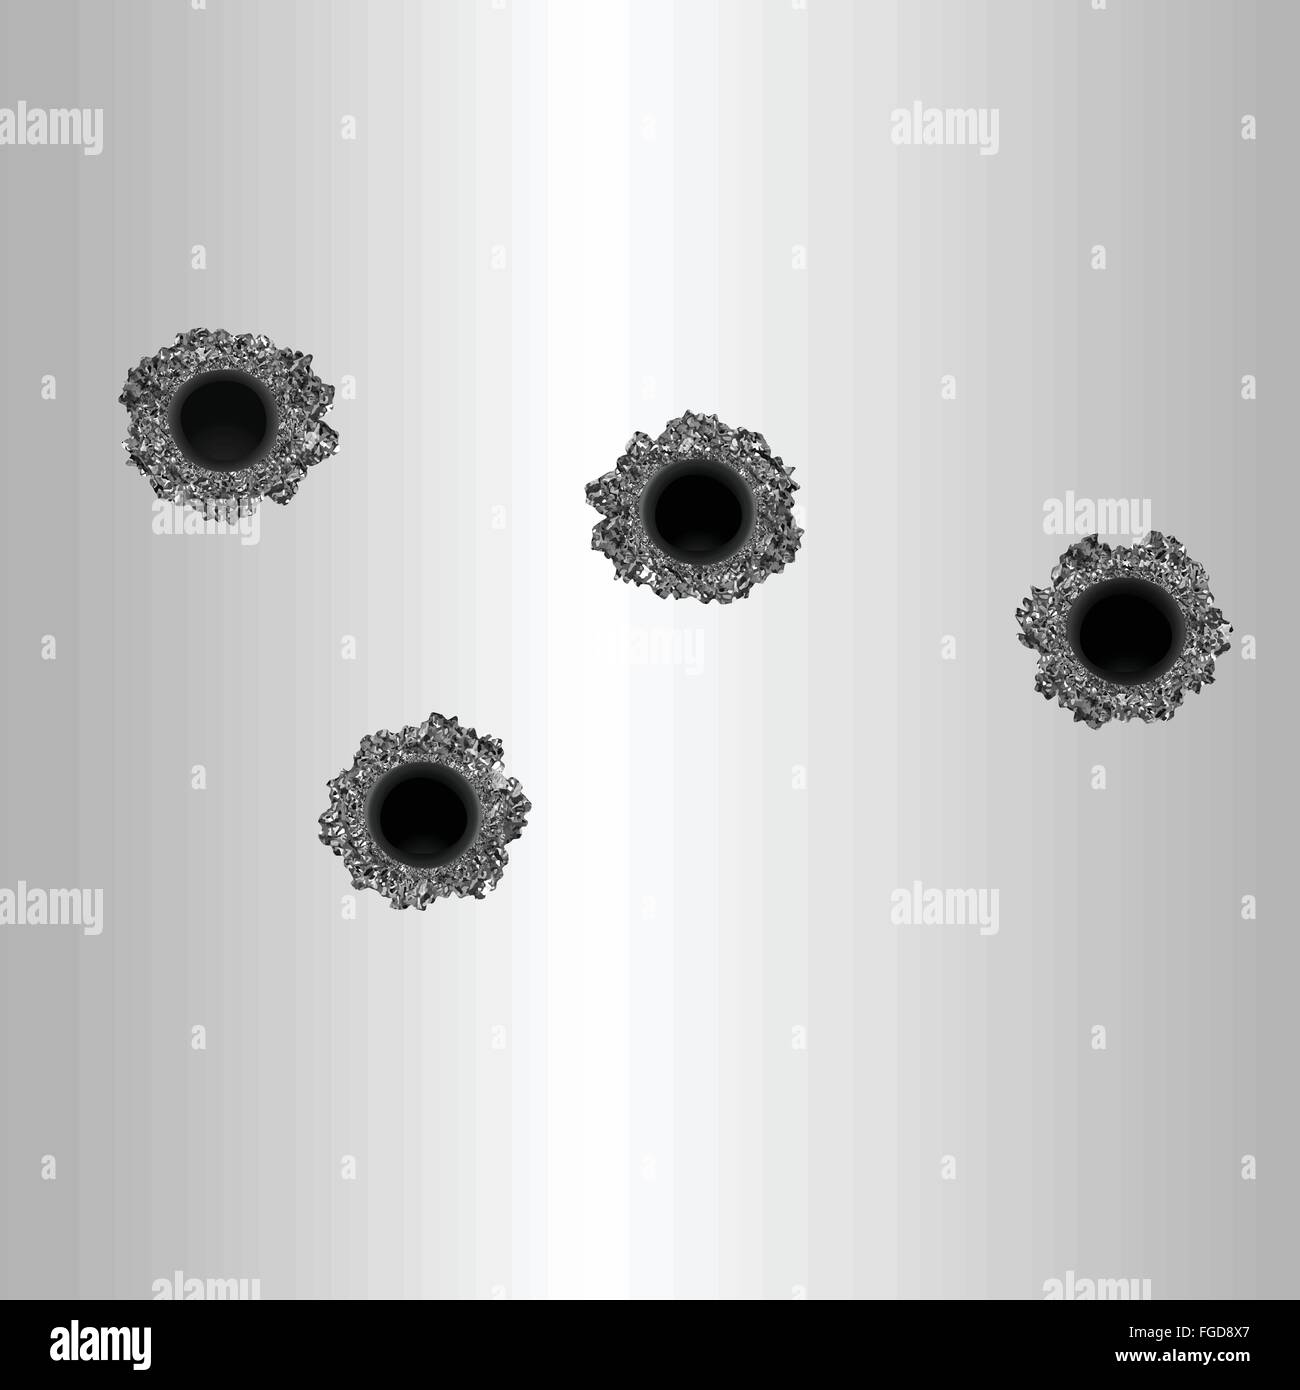 Vector format of bullet holes in metal plate. Stock Vector